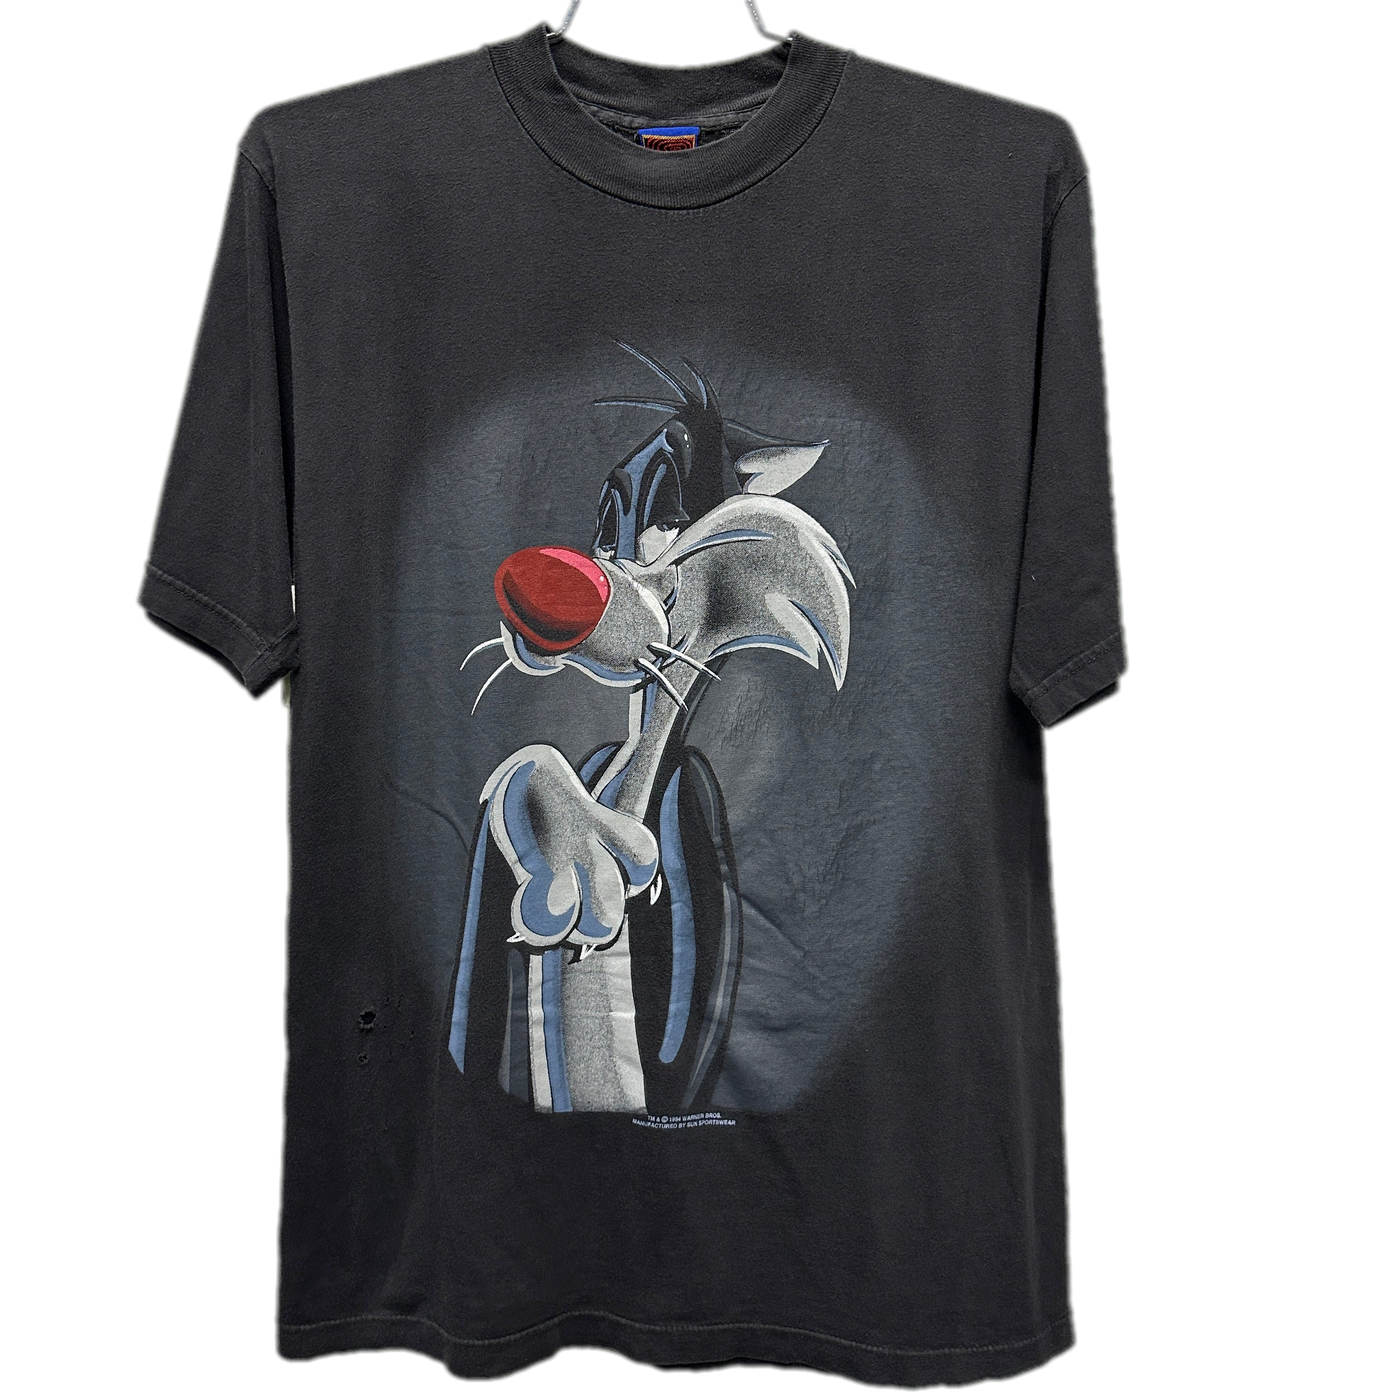 '94 Sylvester Black Cartoon T-Shirt sz M